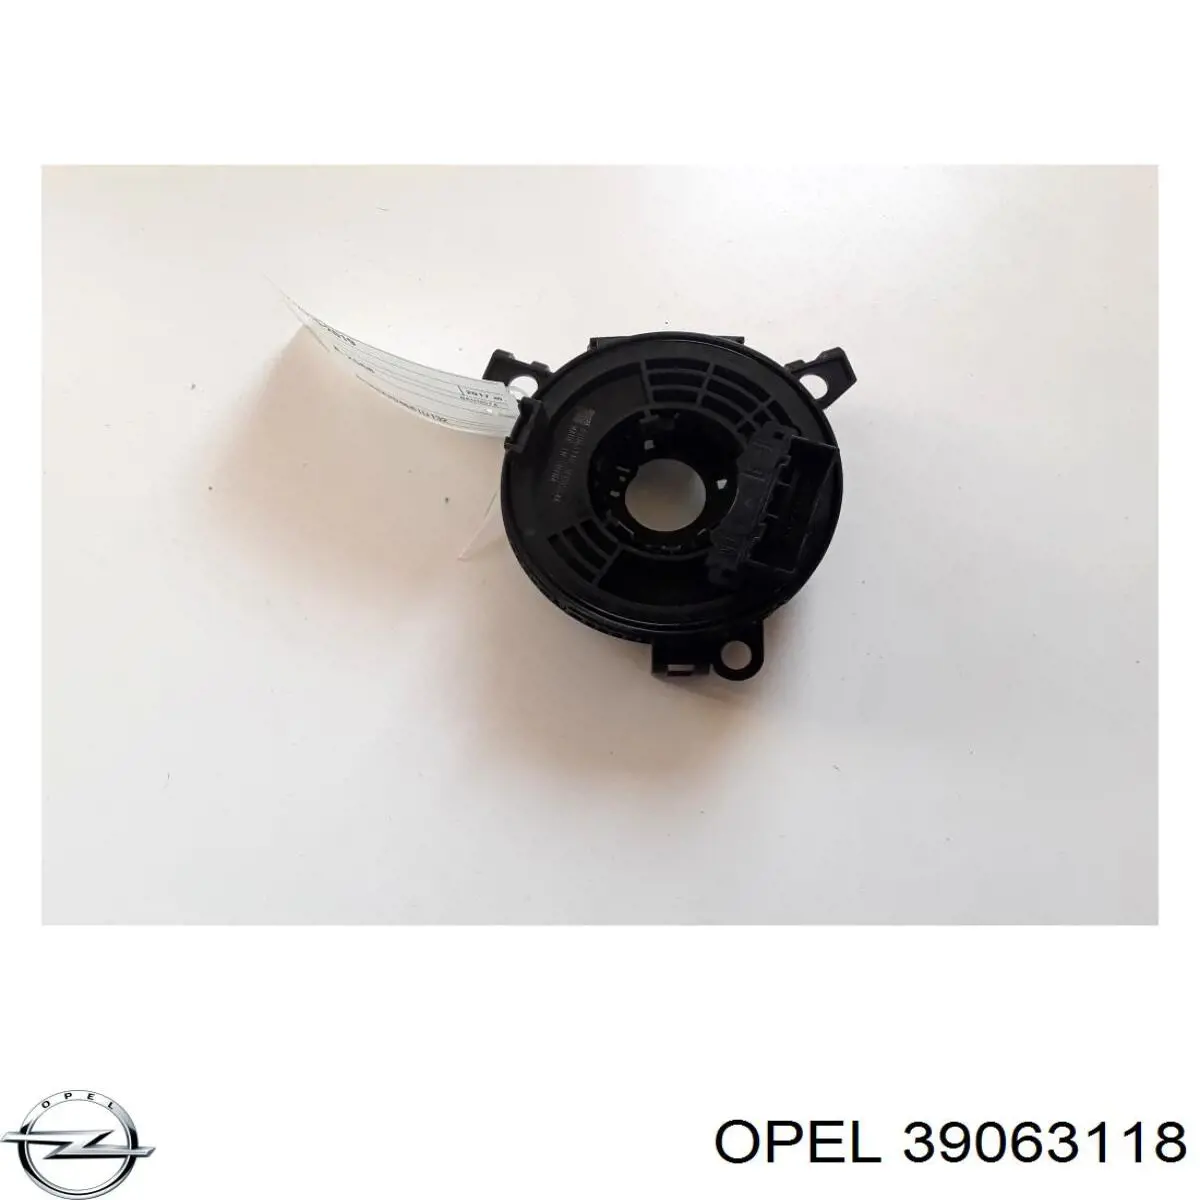 39063118 Opel anel airbag de contato, cabo plano do volante